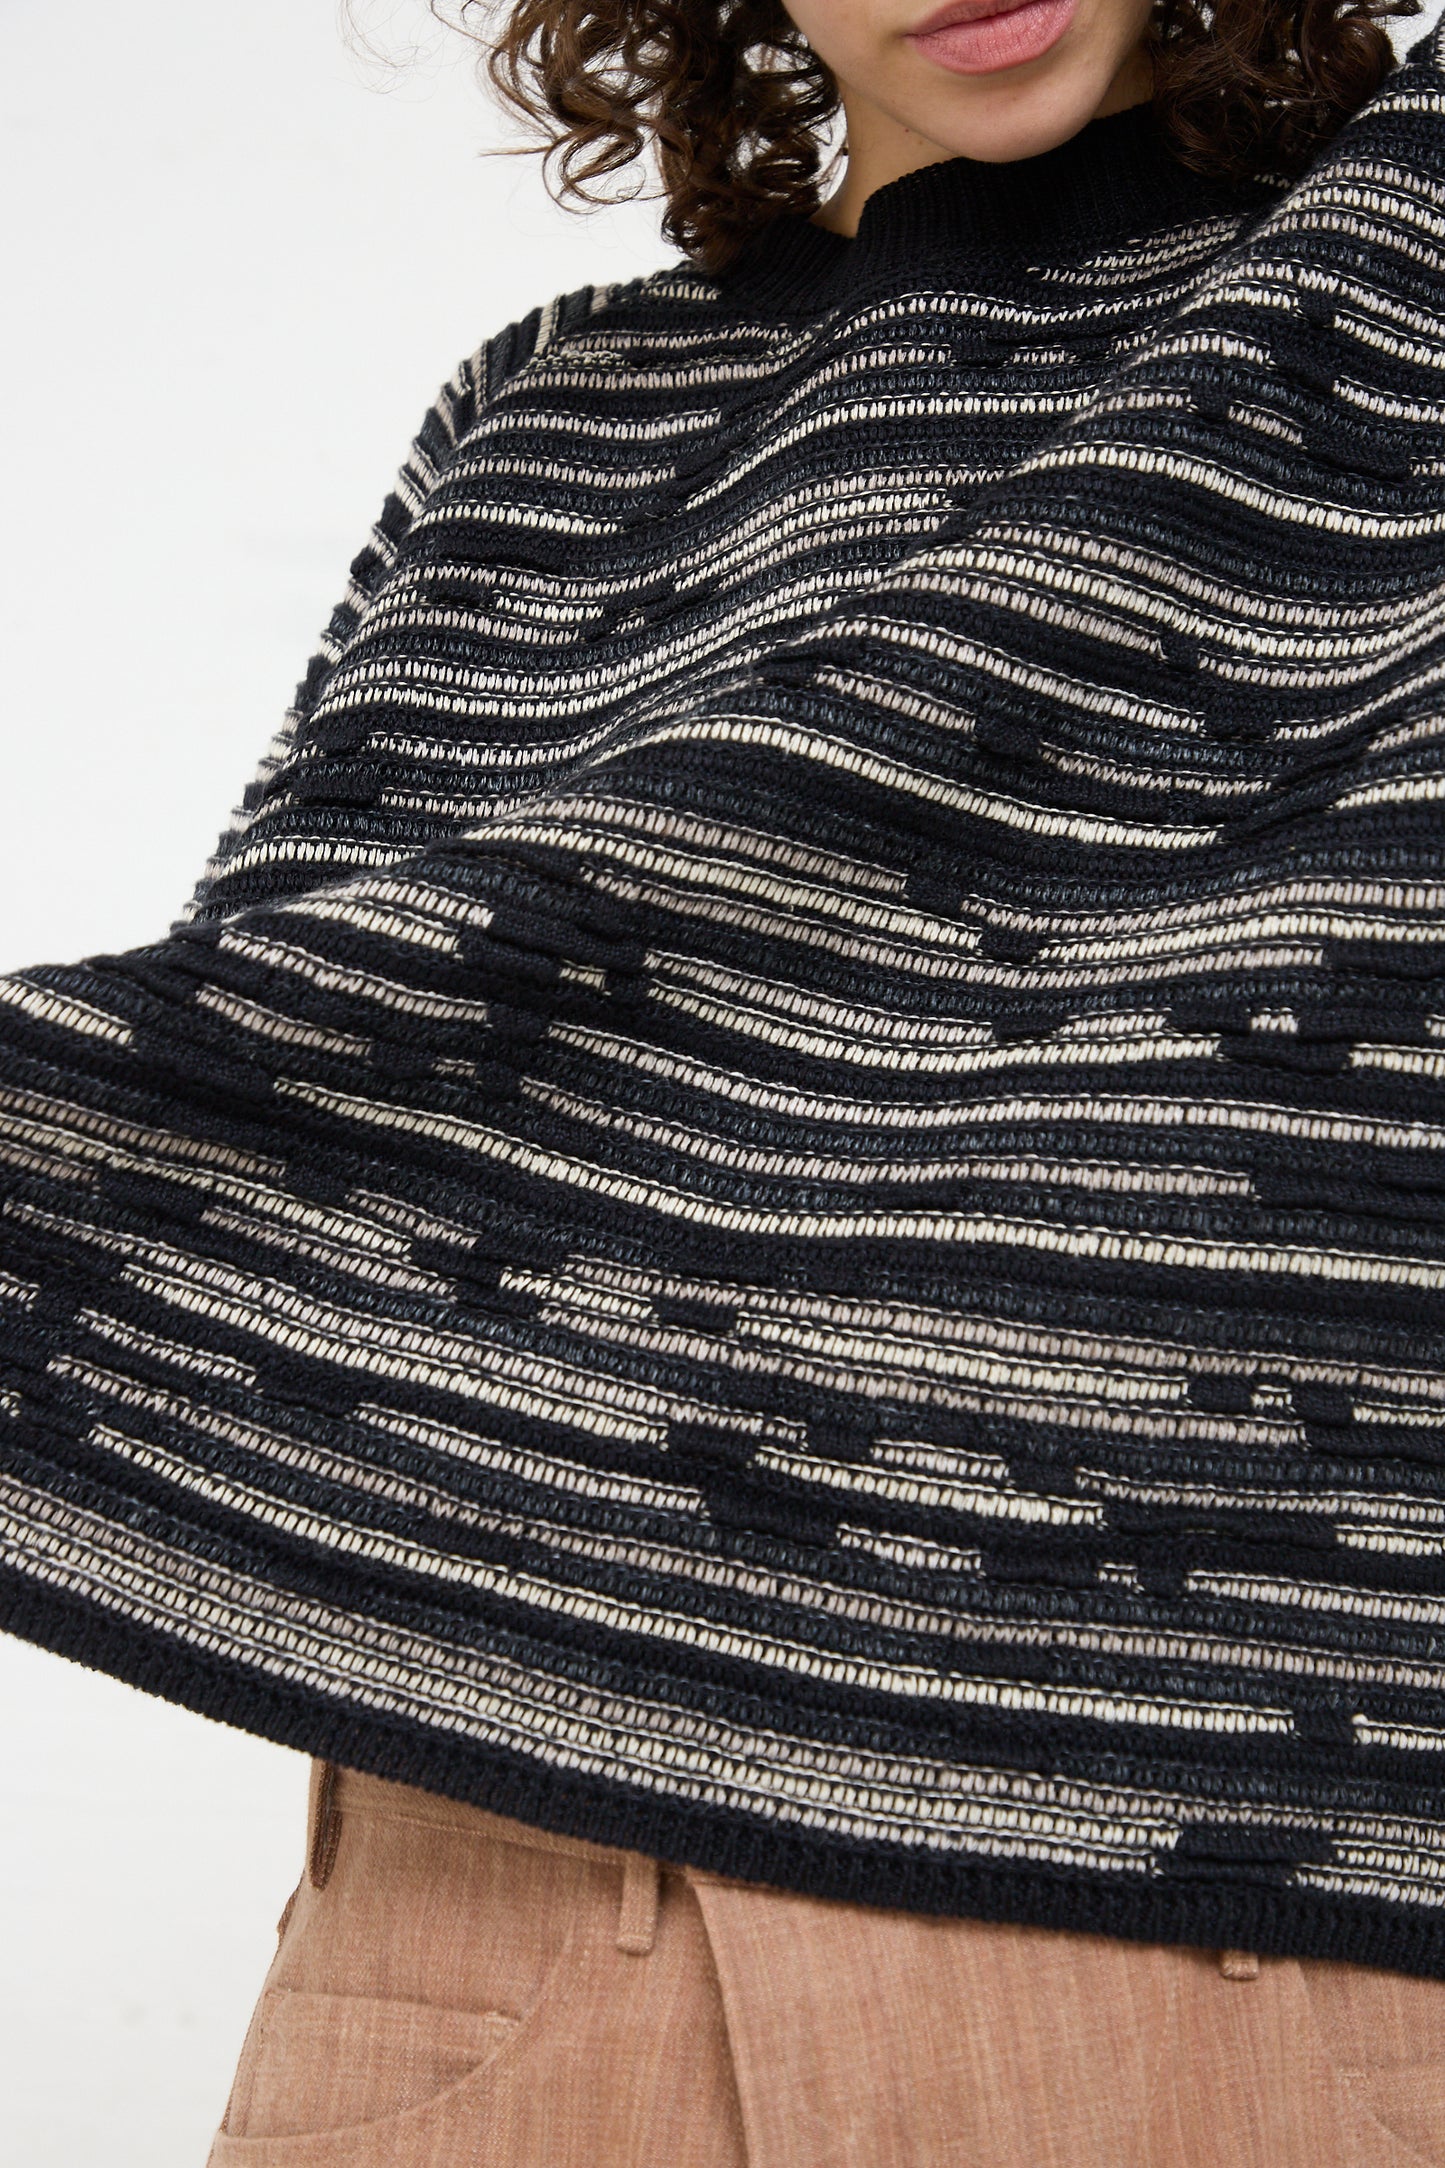 A woman in a Linen Cotton Knit Crewneck in Black made by Jan-Jan Van Essche.